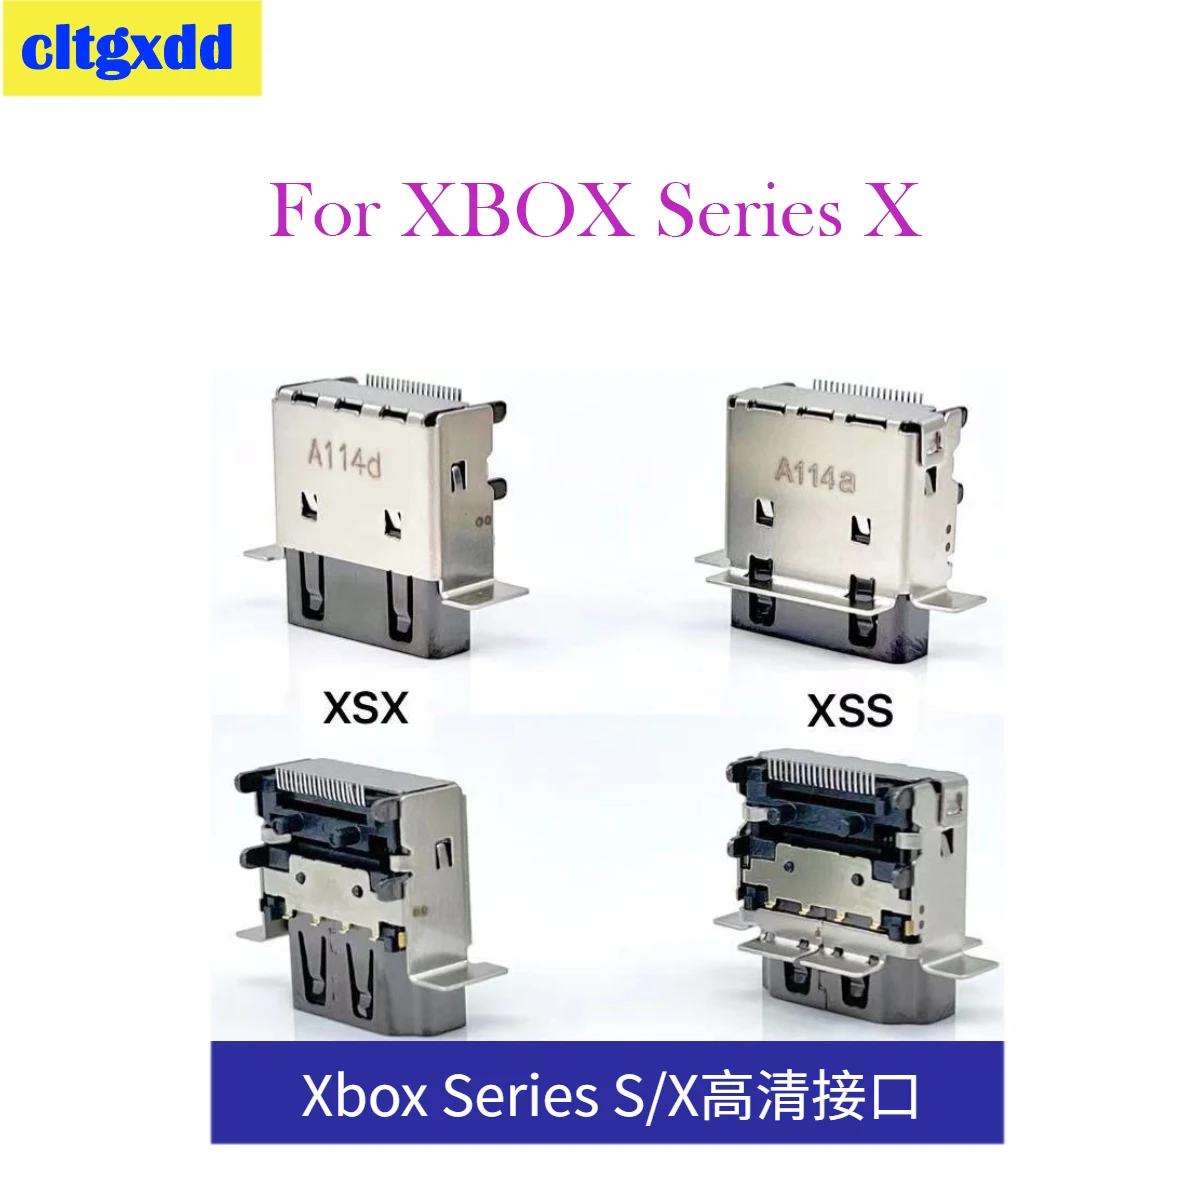 

Cltgxdd 10 шт. для Xbox серии SX HDMI-совместимый разъем интерфейса для Microsoft XBOX серии X HDMI-совместимый порт соединения